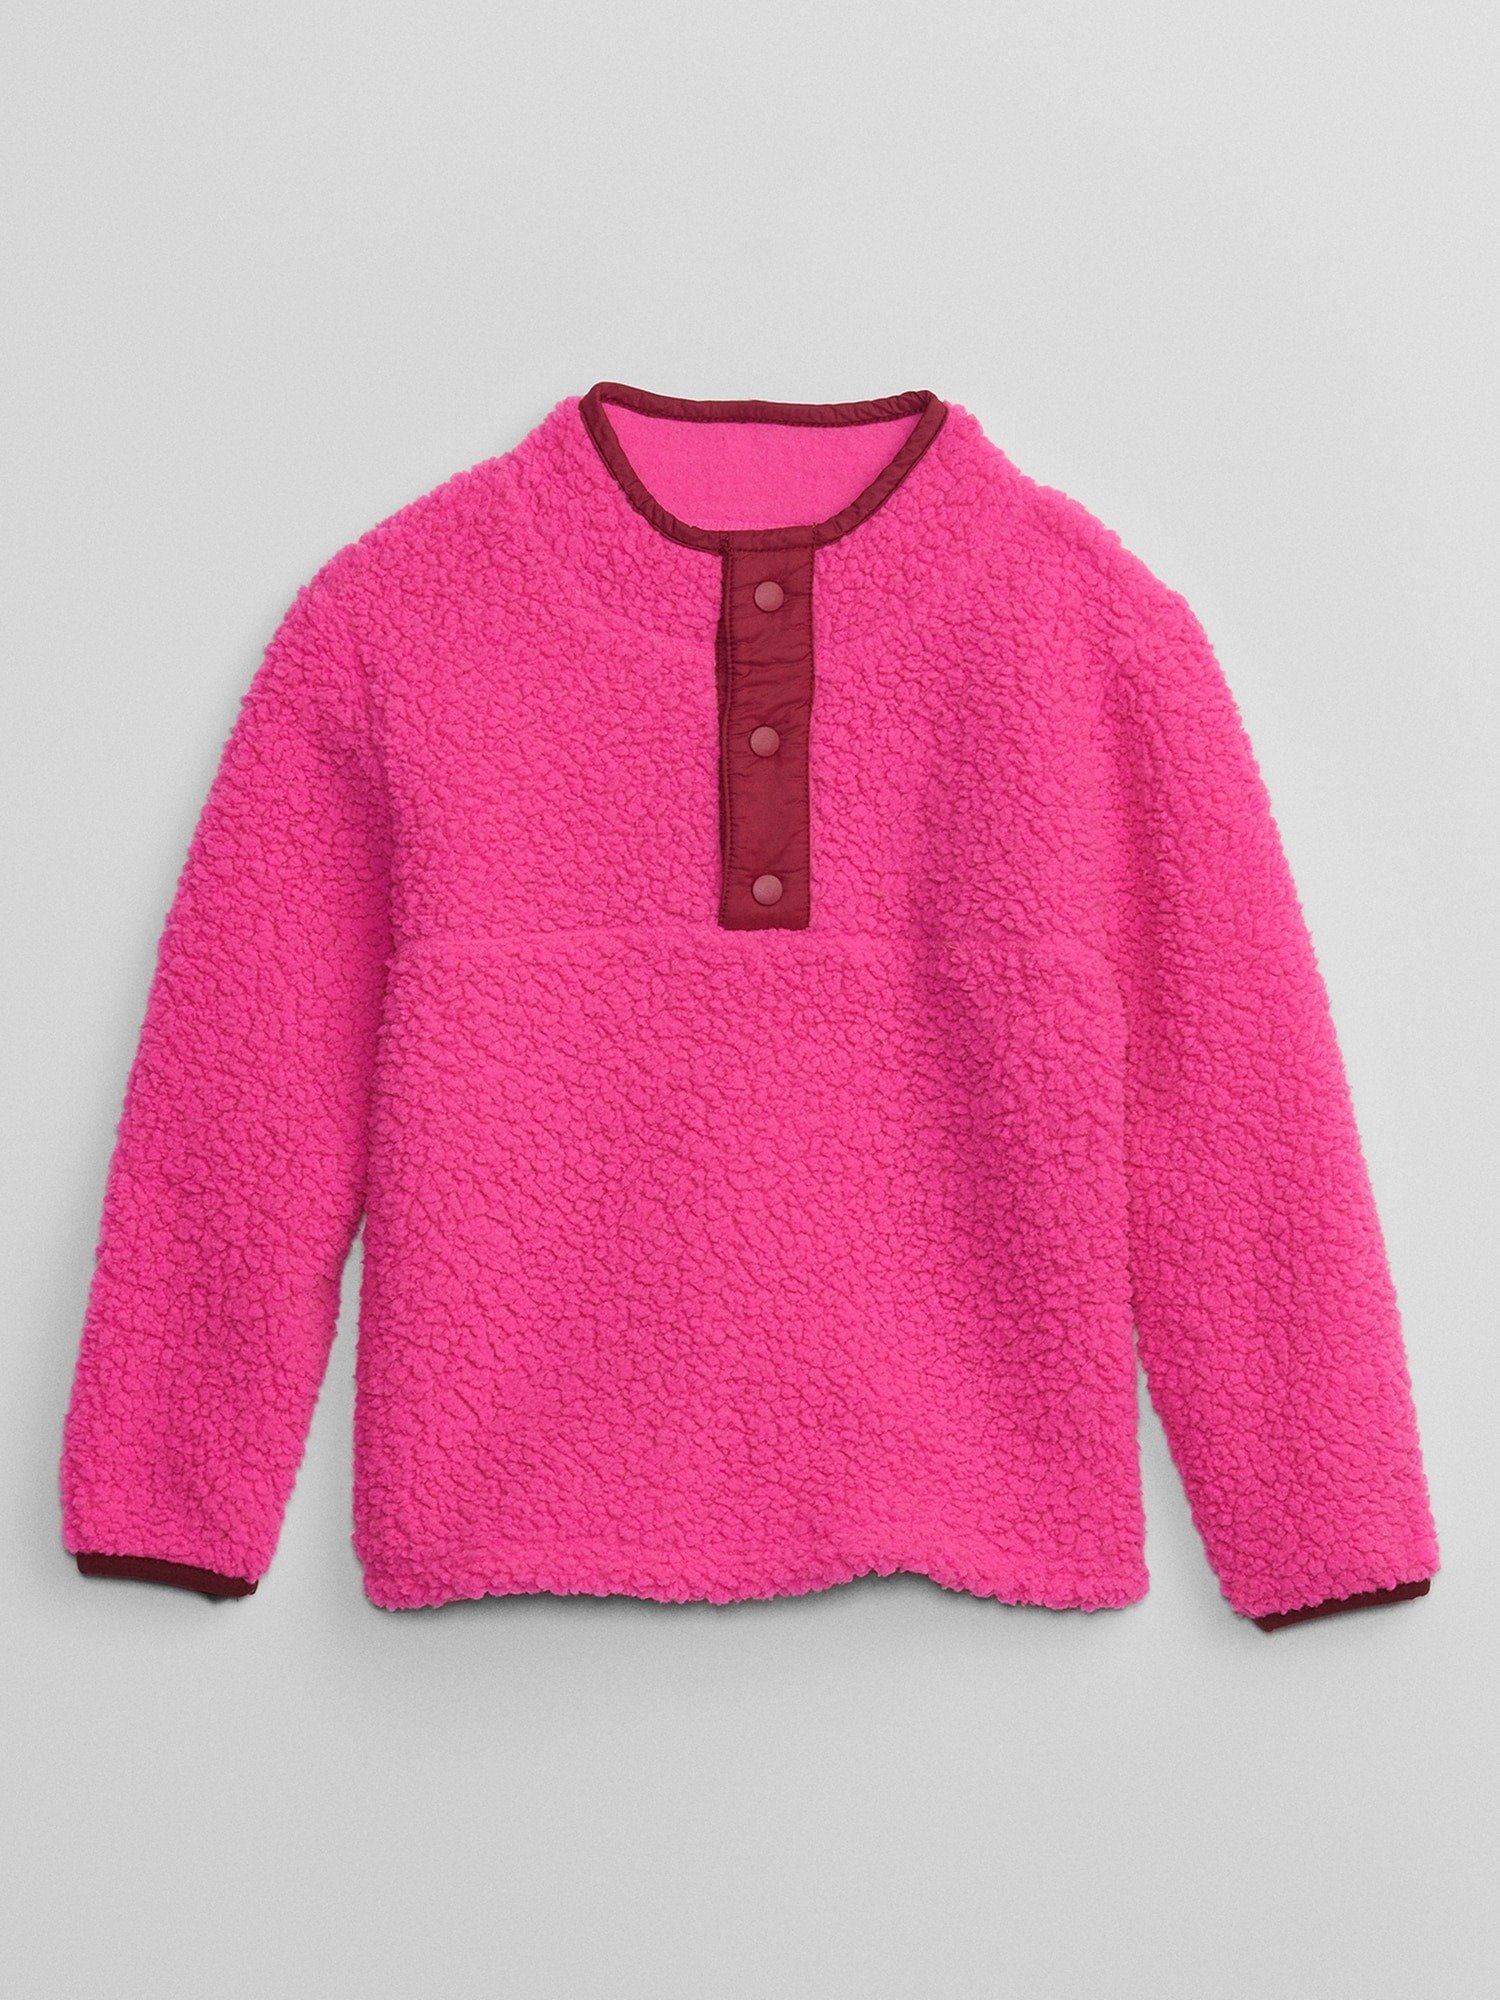 Sherpa Çıtçıt Kapamalı Sweatshirt product image